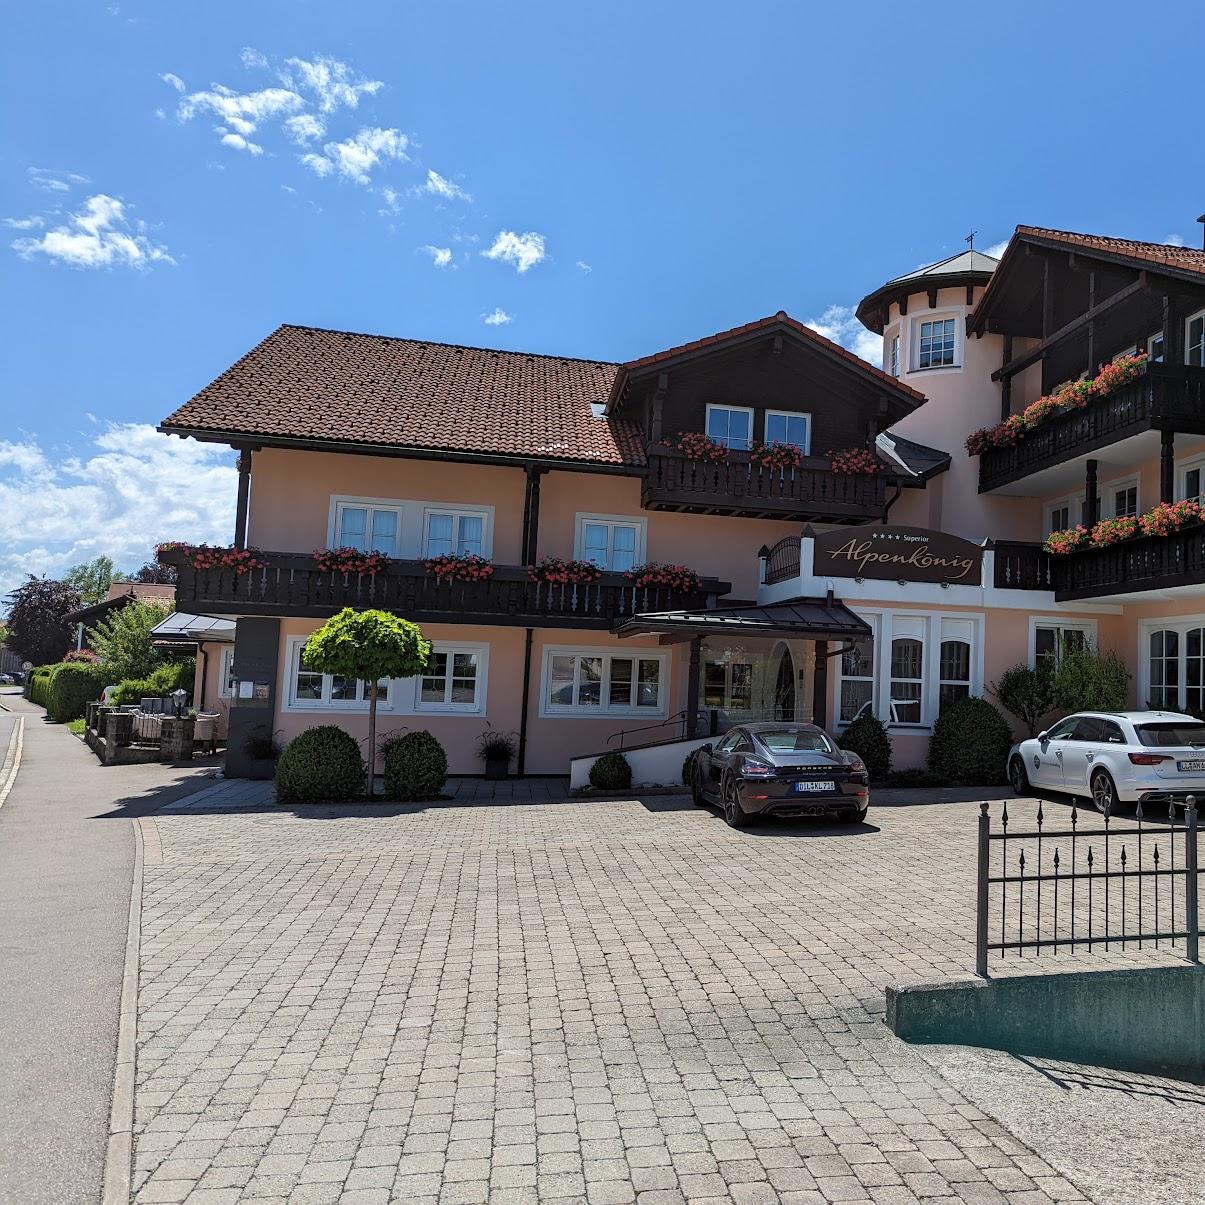 Restaurant "Hotel Alpenkönig" in Oberstaufen